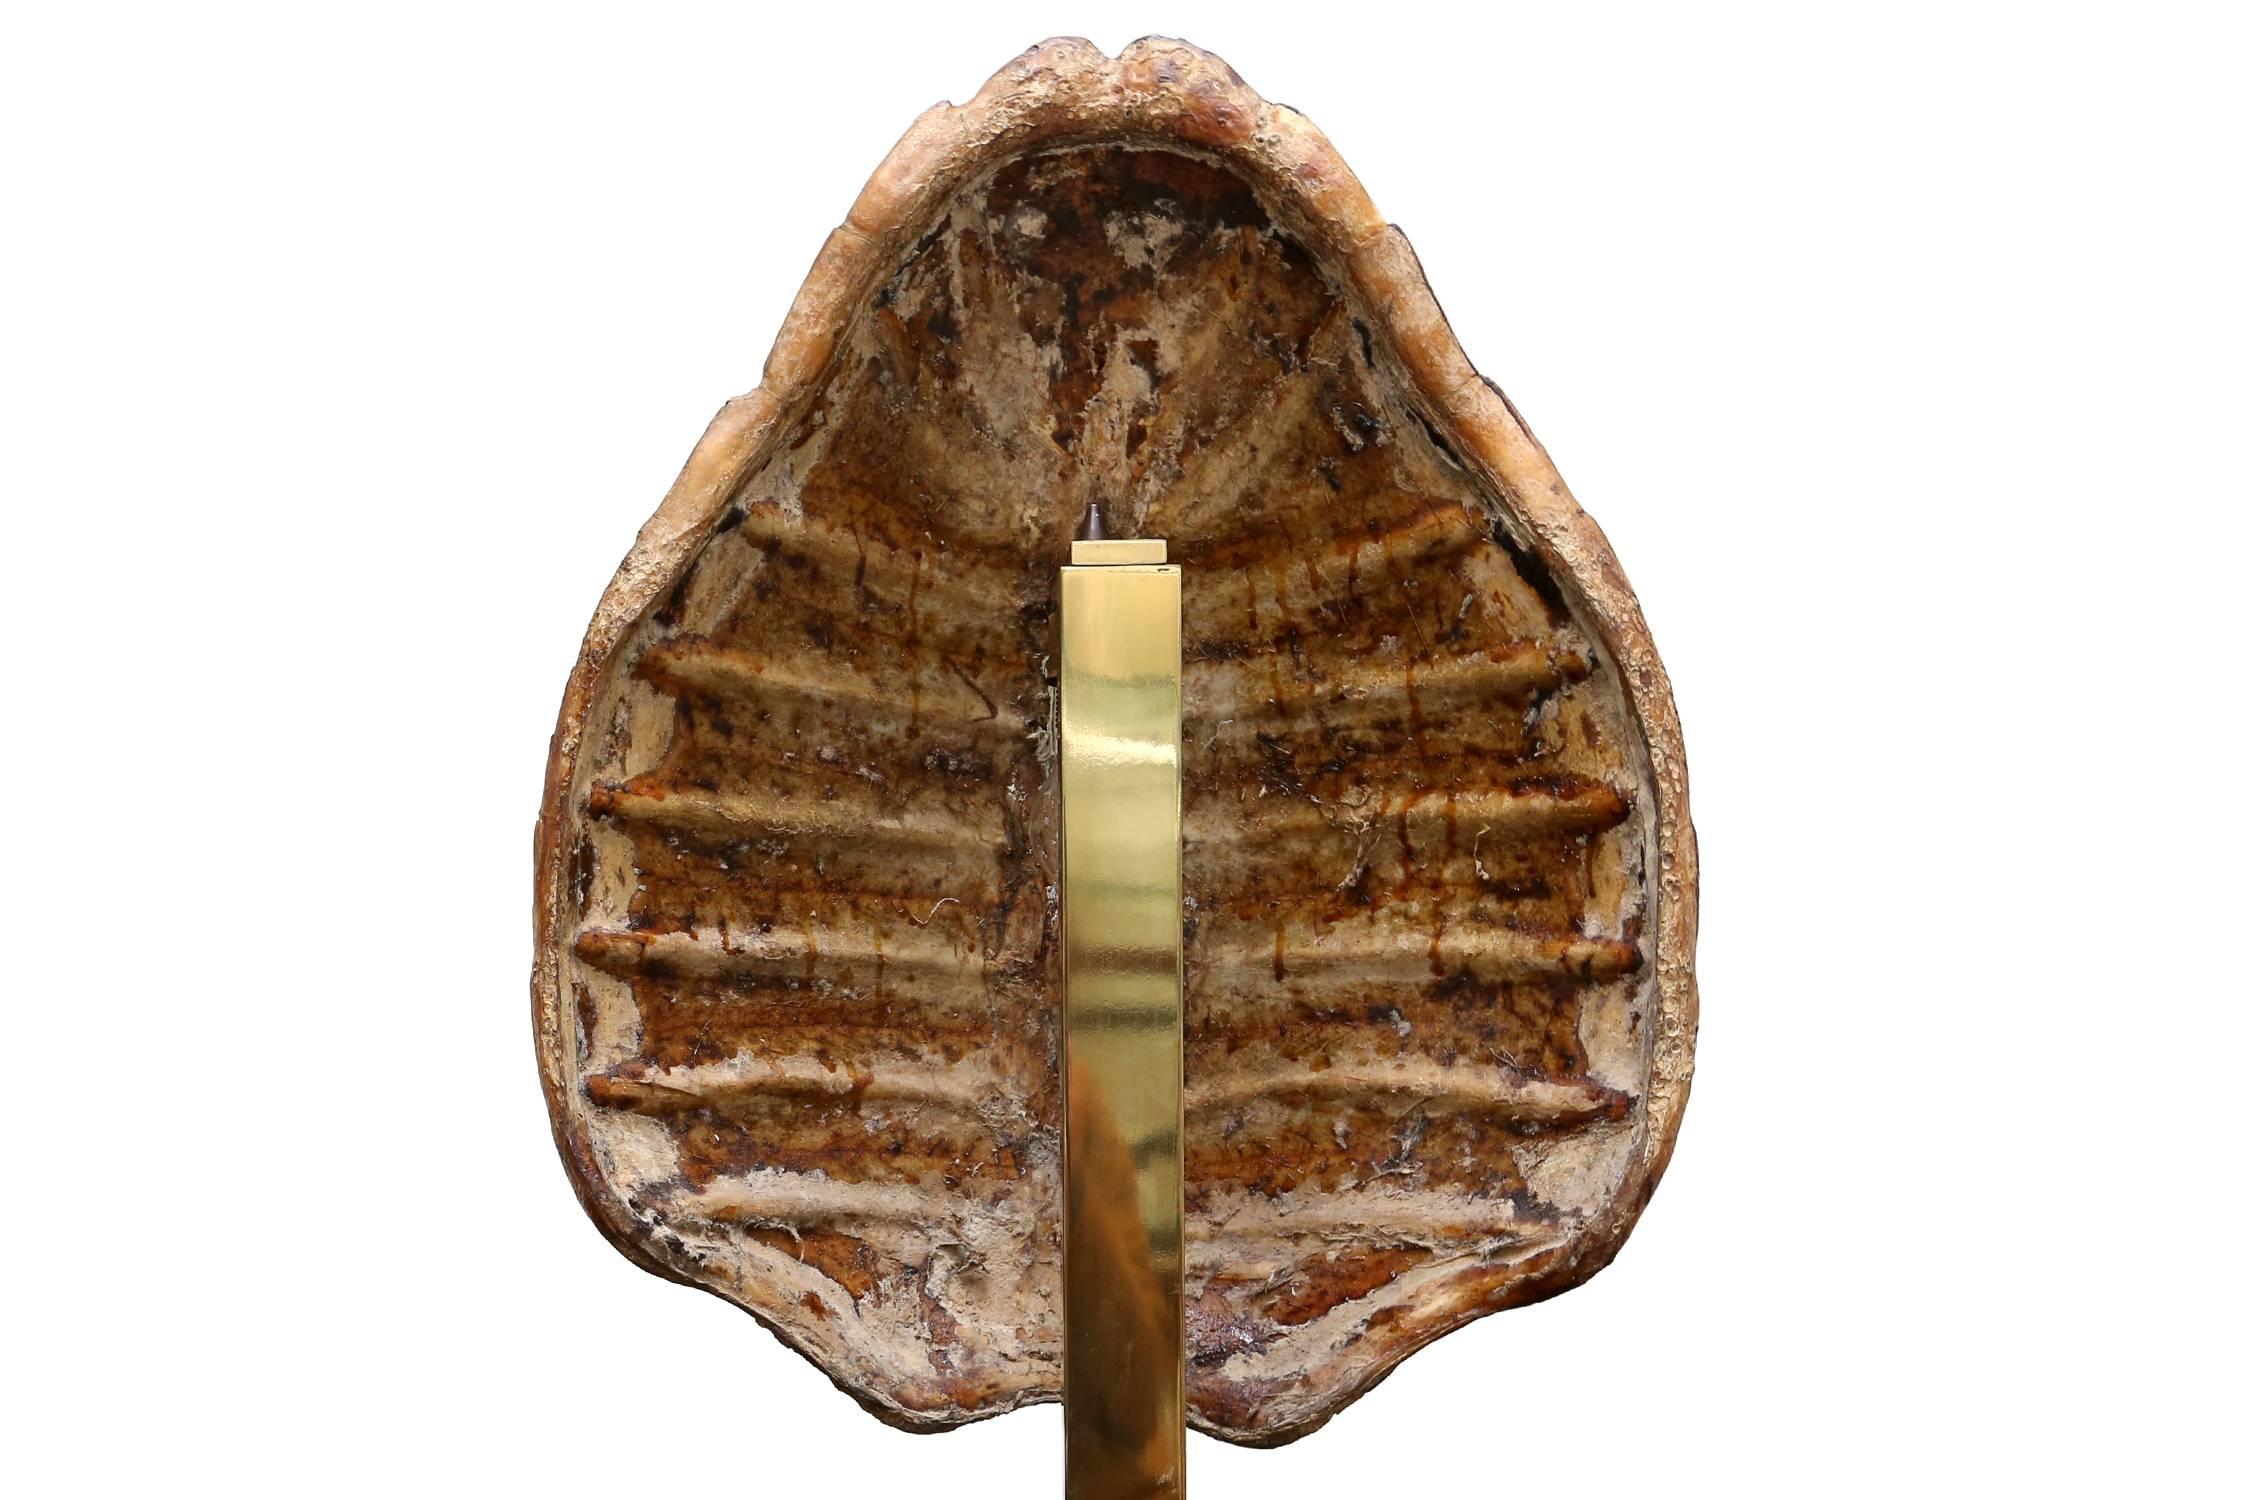 Large Sea Turtle Shell  Brass  Black Laminate
France  1970s
H 80 cm  L 55 cm  D 25 cm
